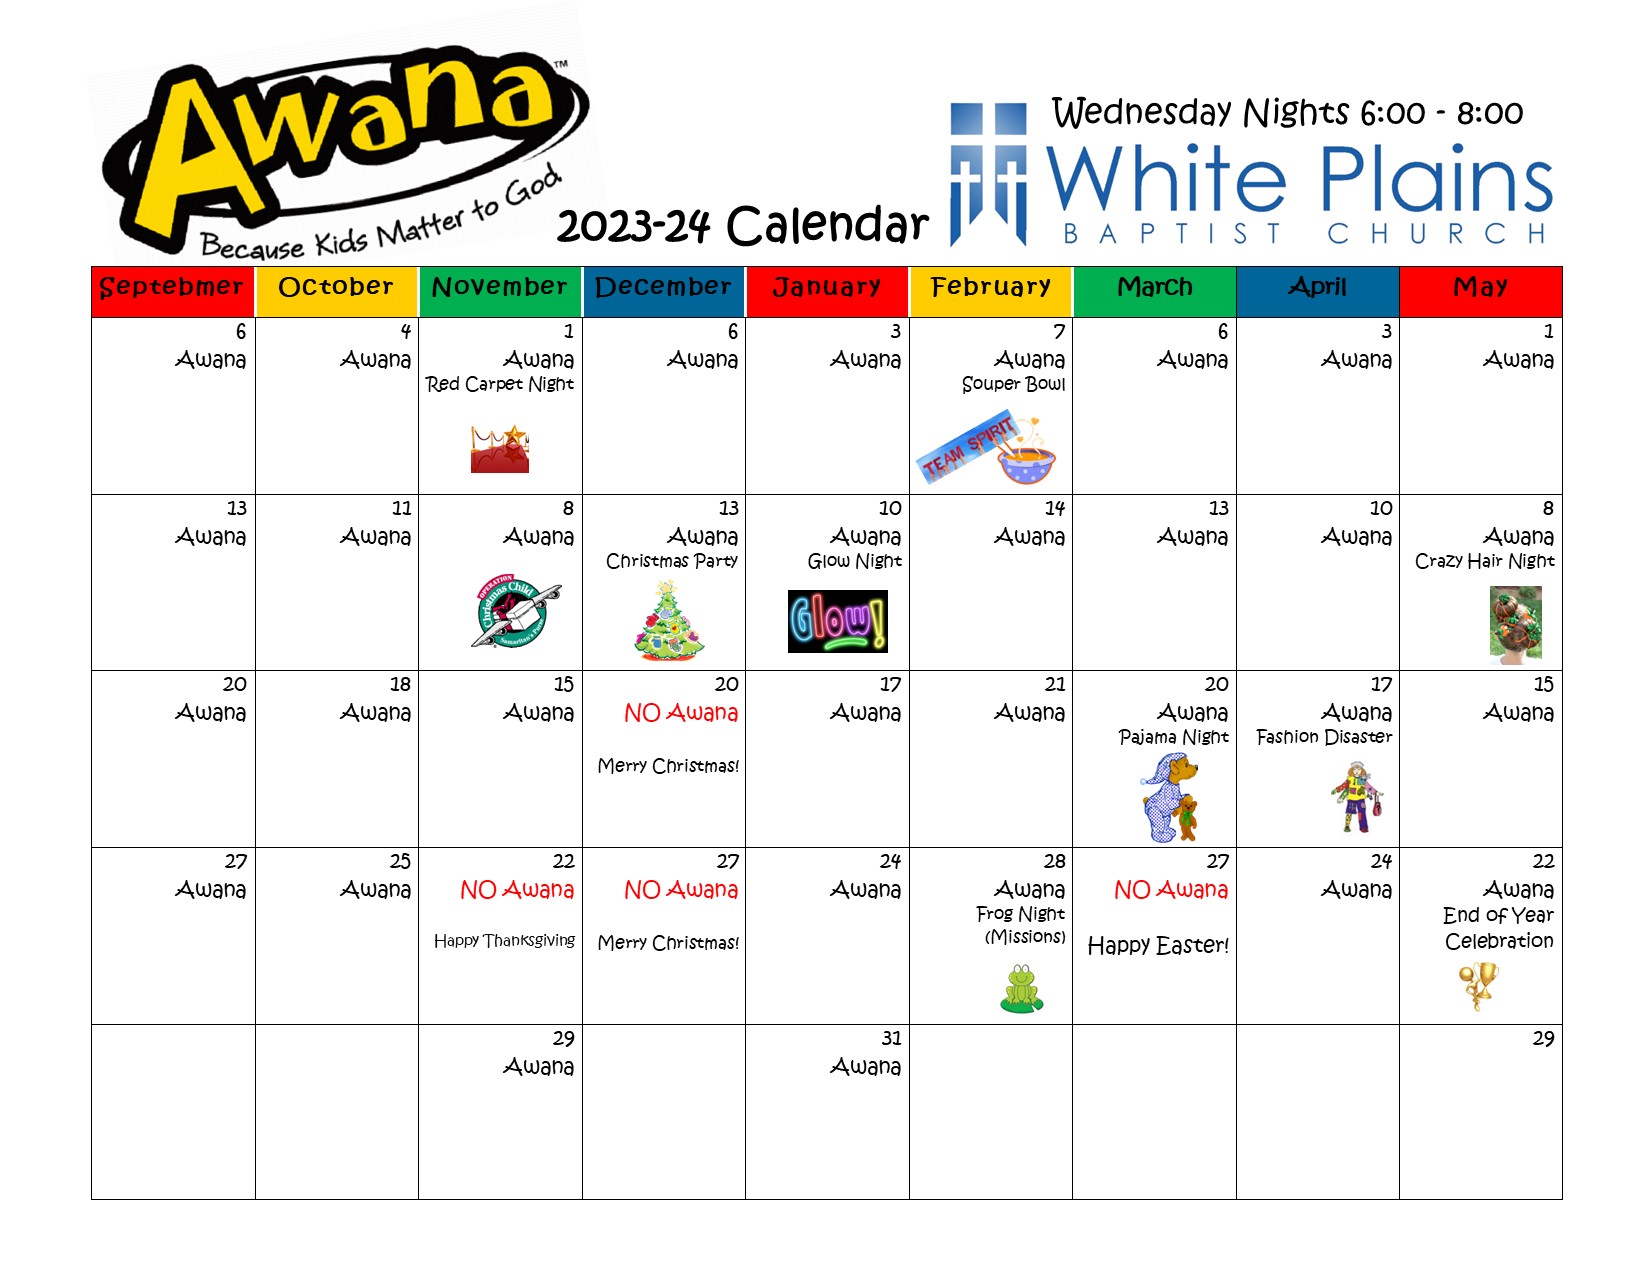 Awana Yearly Calendar 2023-24